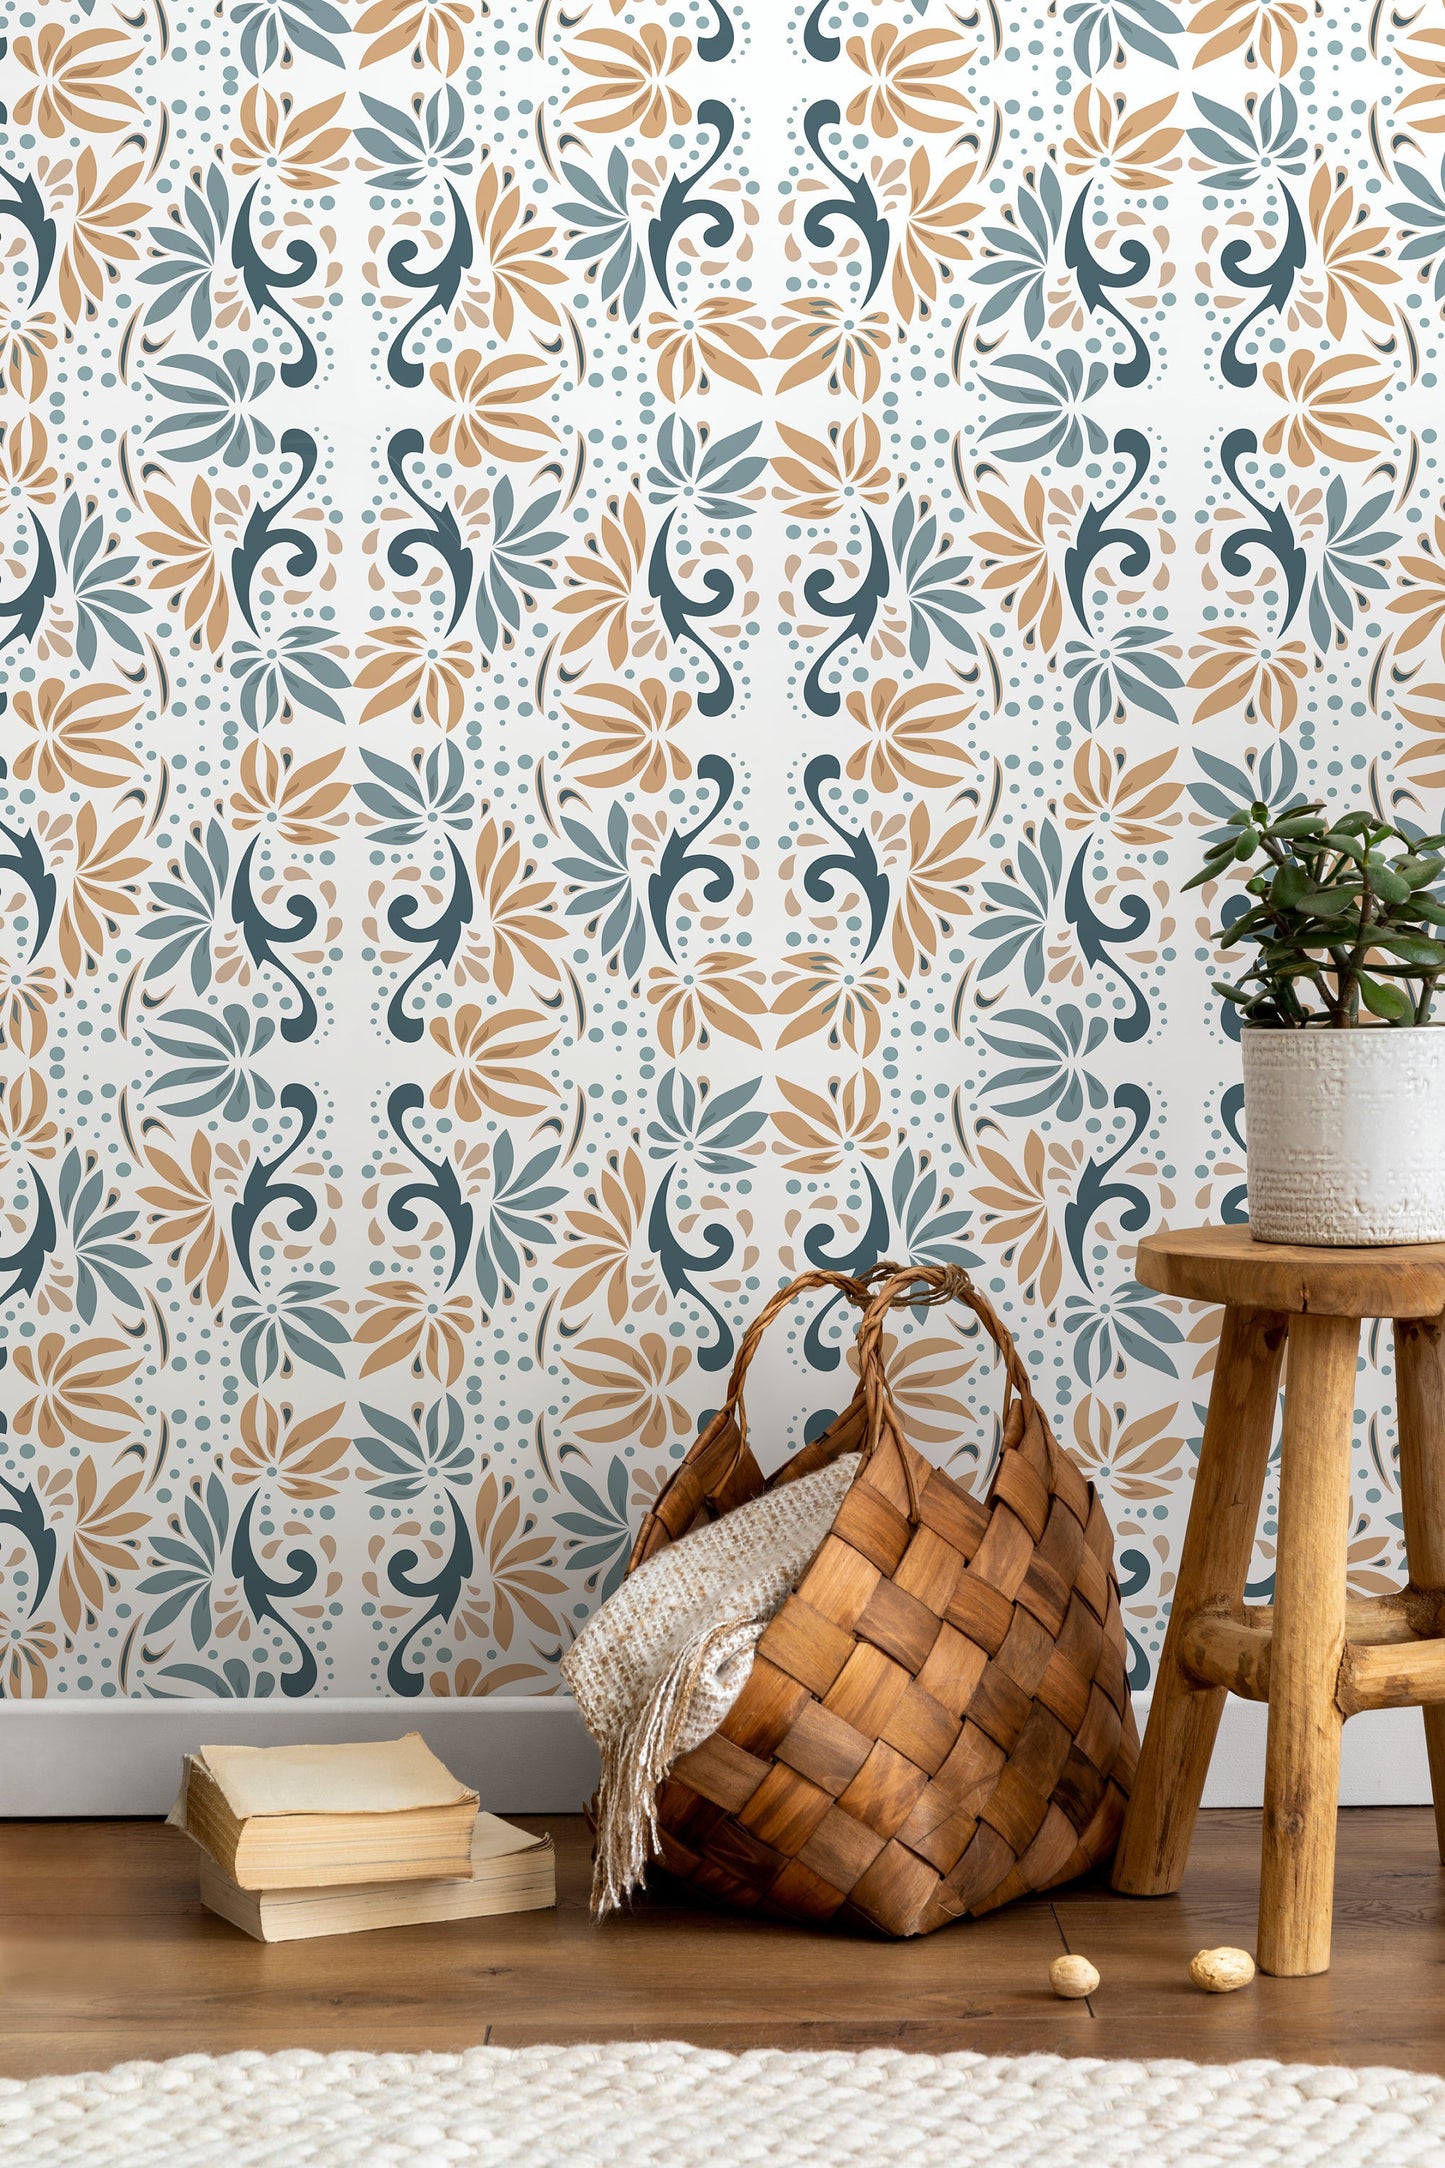 Modern Floral Wallpaper / Peel and Stick Wallpaper Removable Wallpaper Home Decor Wall Art Wall Decor Room Decor - D250